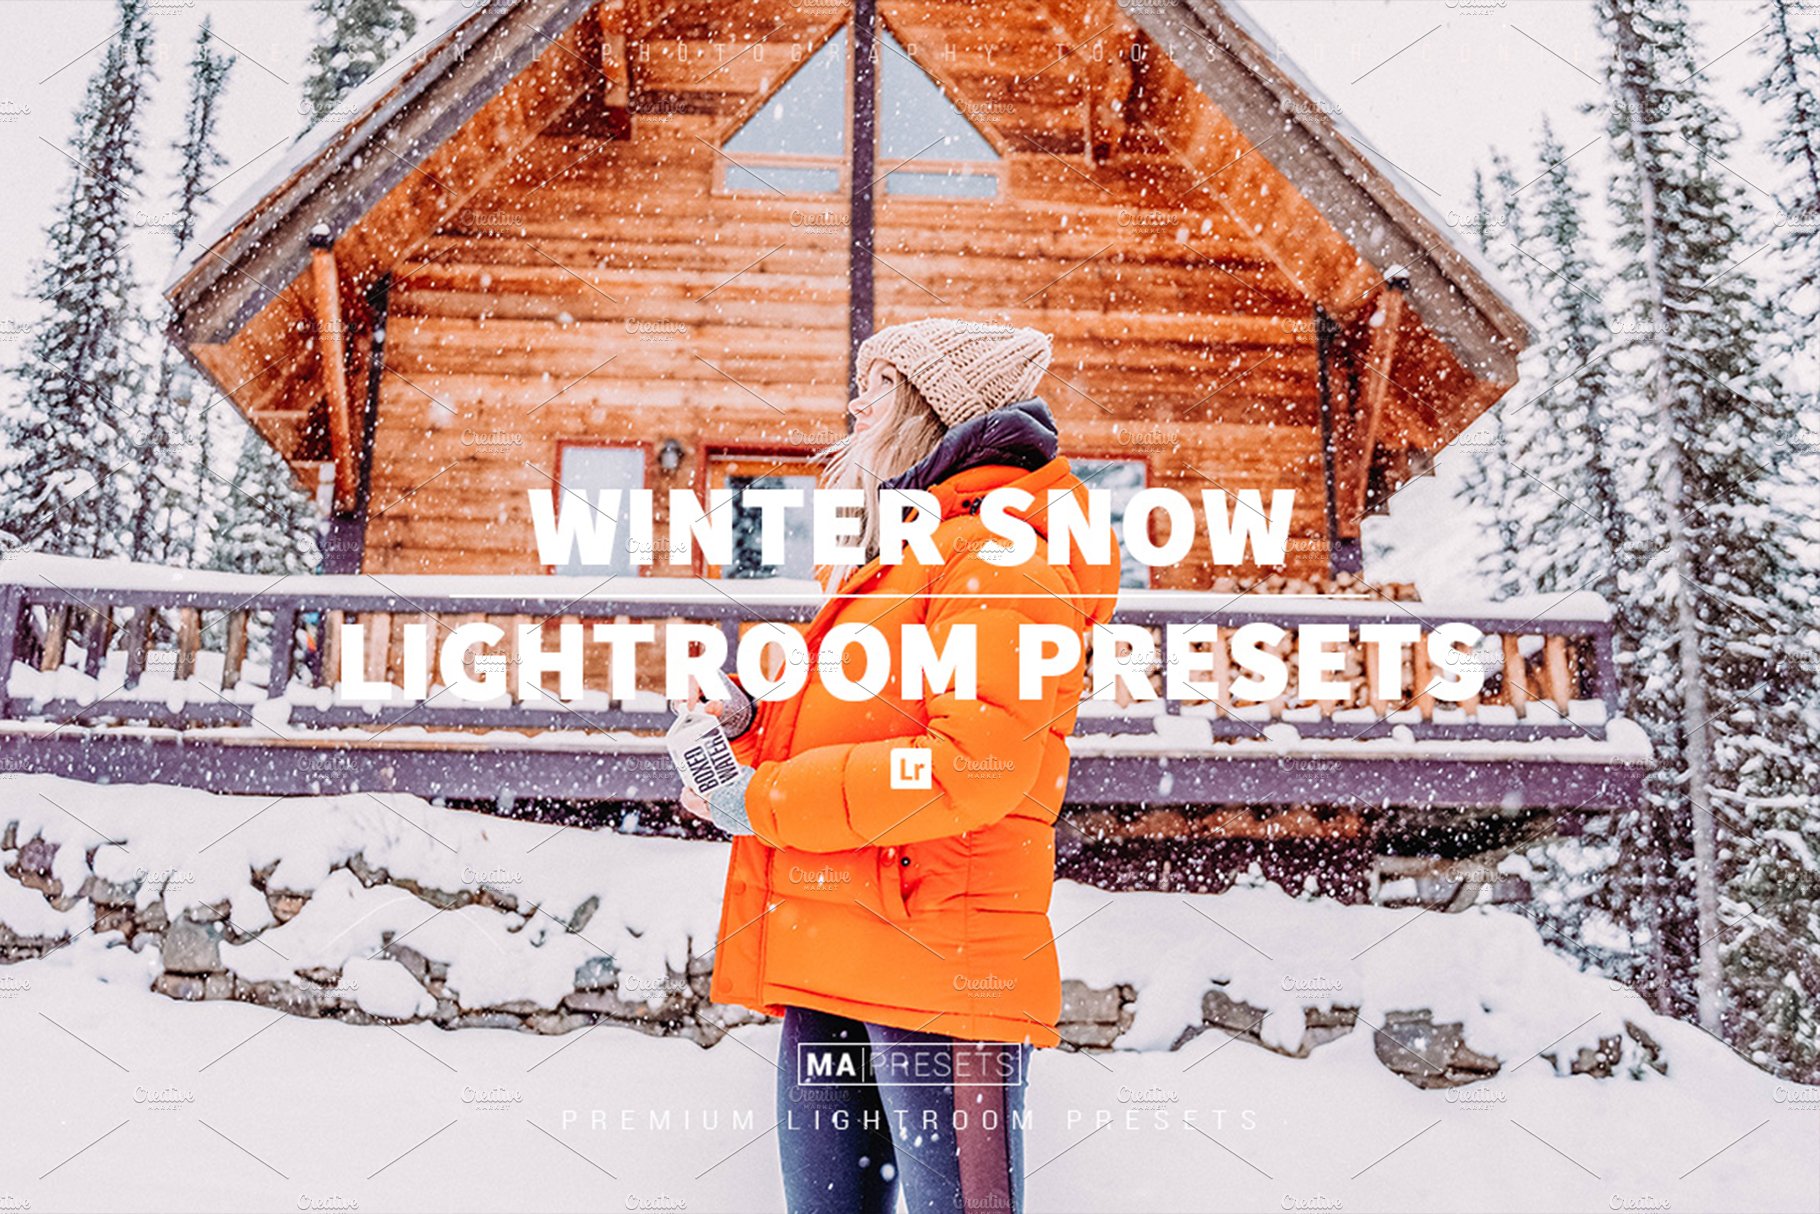 10 WINTER SNOW Lightroom Presetscover image.